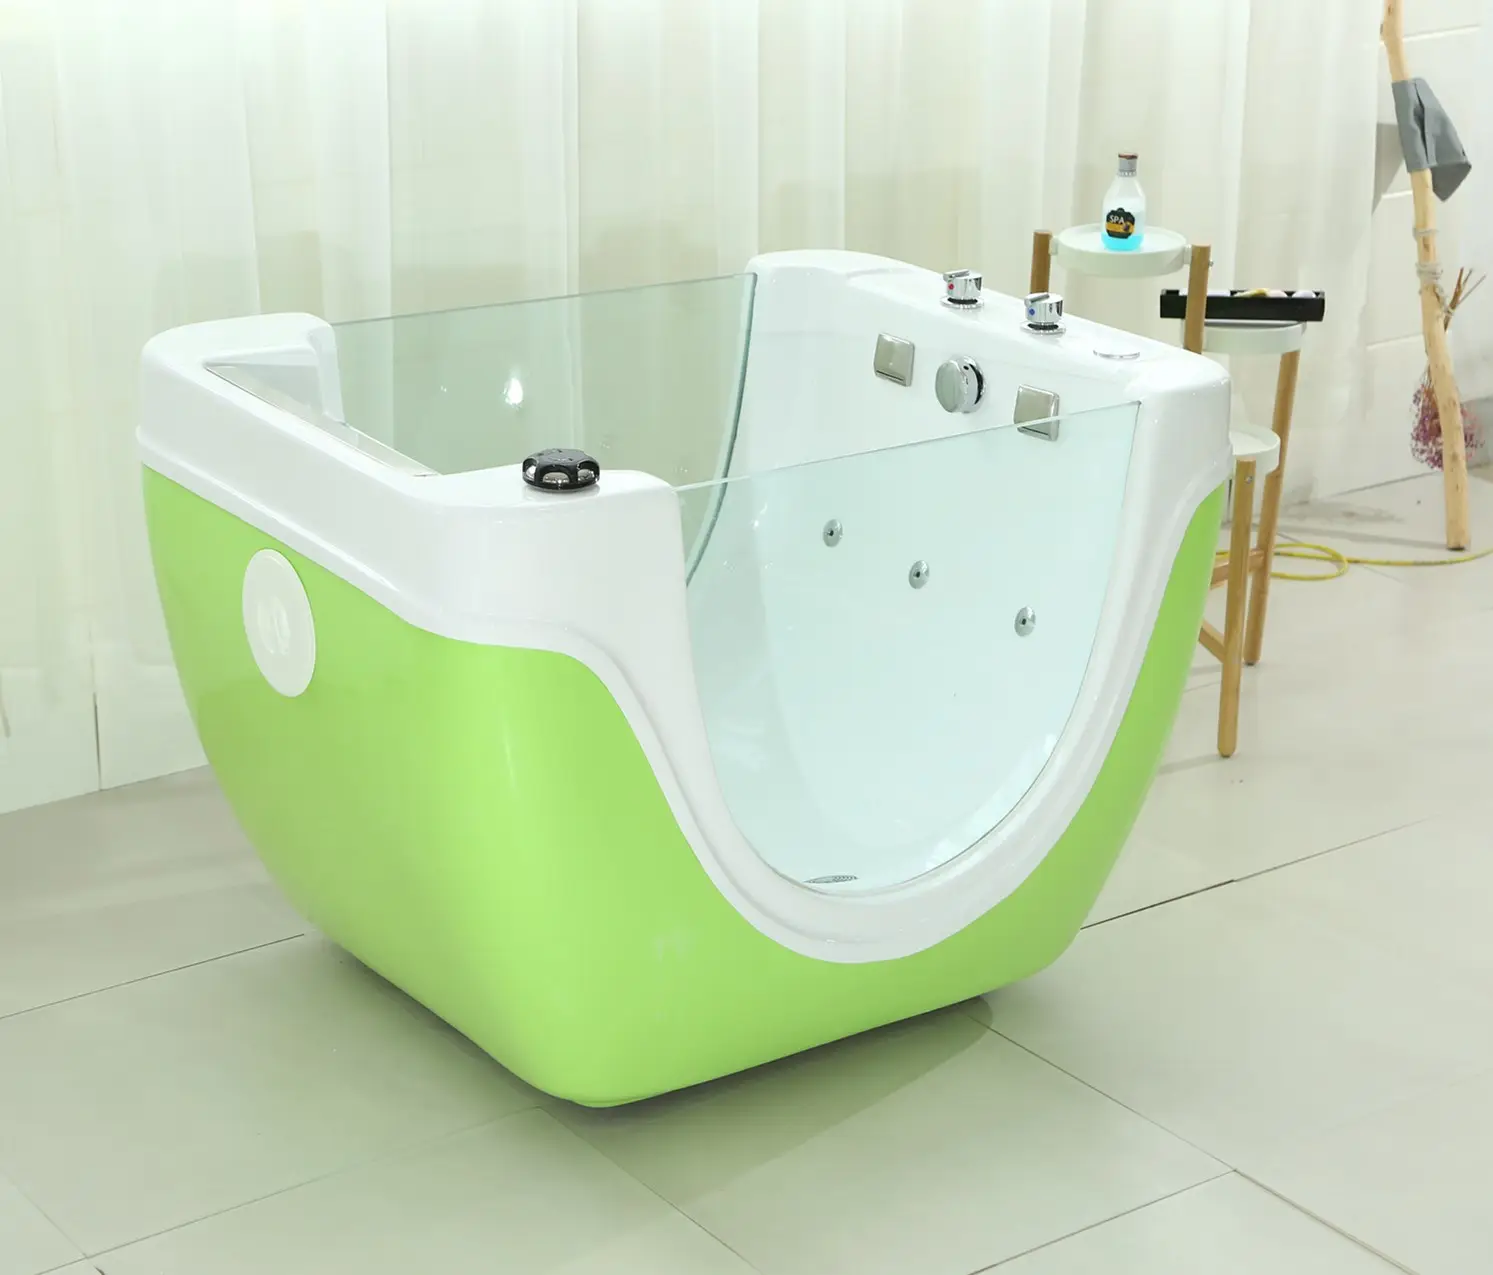 निर्माण तैरना बाथरूम गर्म टब/मानक बाथटब कीमत/मिनी स्नान कंटेनर/बुलबुला विकल्प समारोह, नमूने उपलब्ध